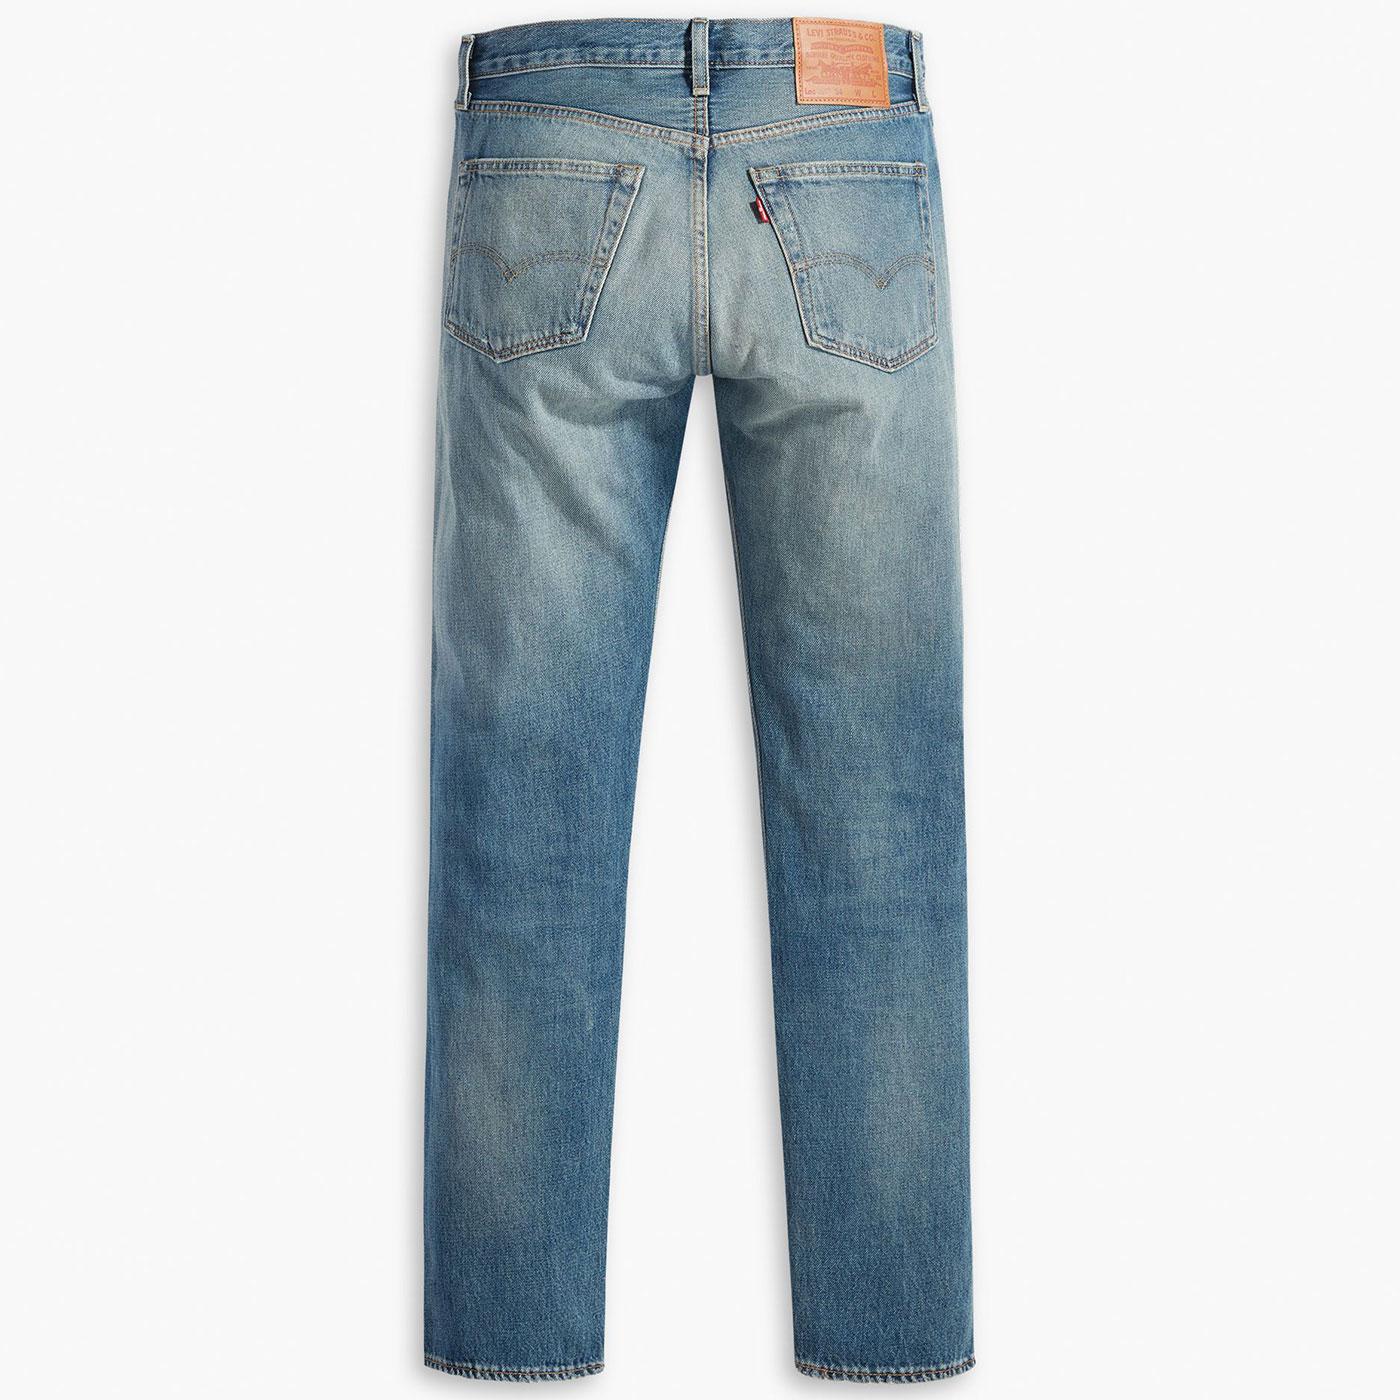 Levi 501 1954 Straight Retro Denim Jeans in Misty Lake Worn In